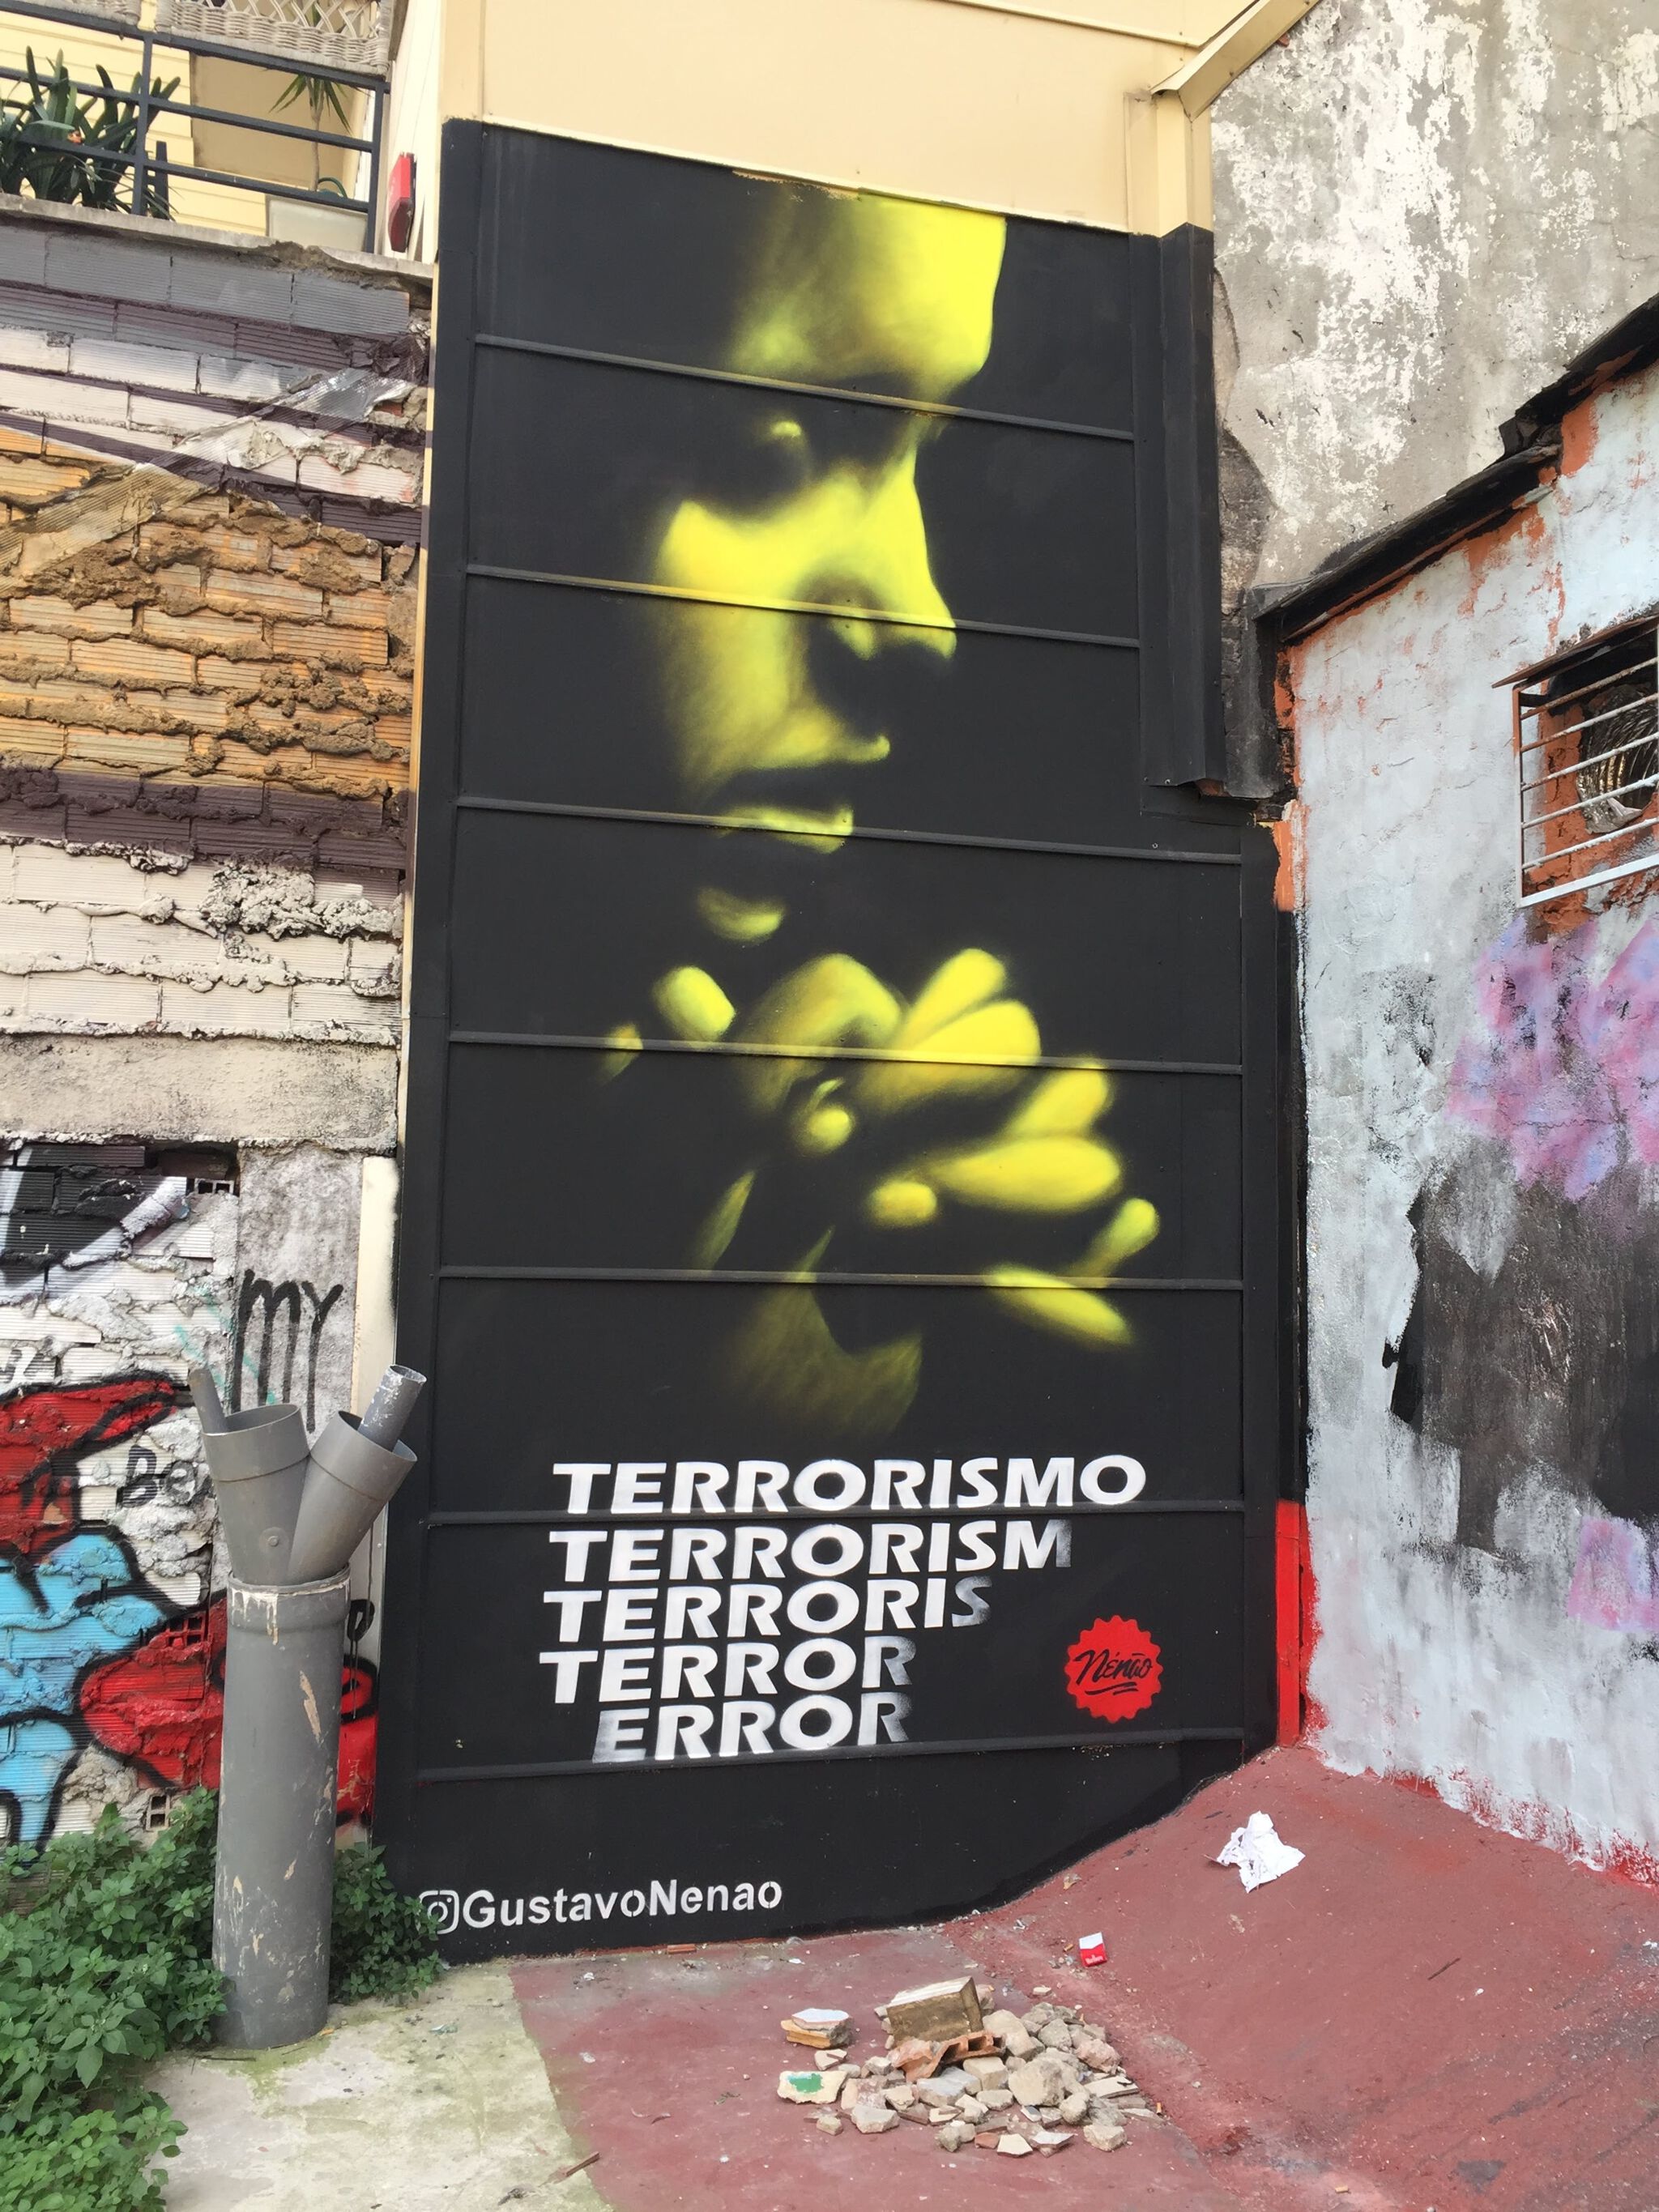 Gustavo Nenao&mdash;Terror is an error